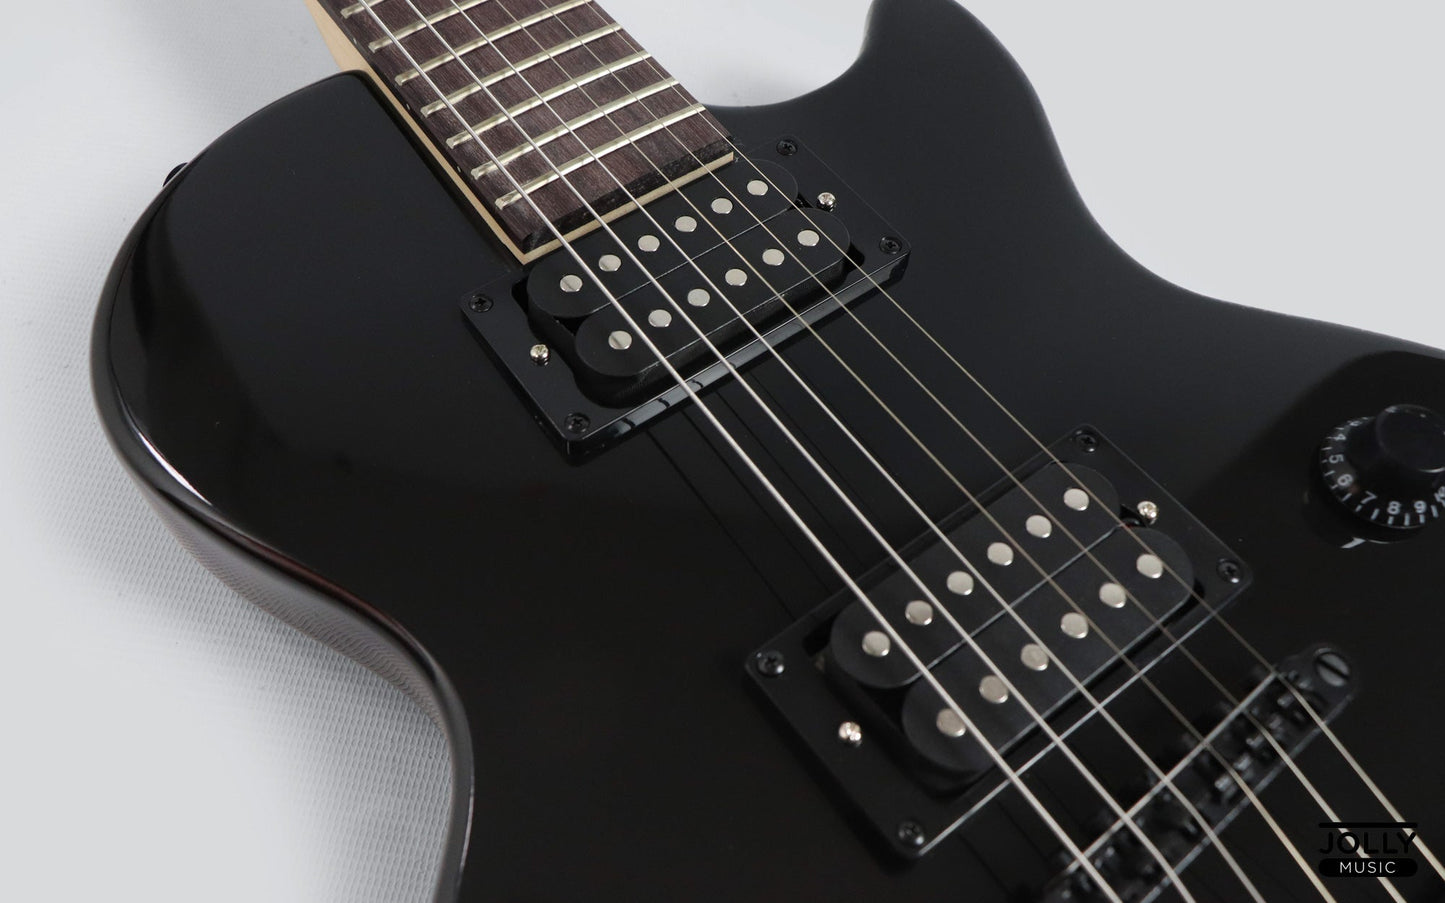 JCraft LPX-1 Single Cut Electric Guitar with Gigbag - Onyx